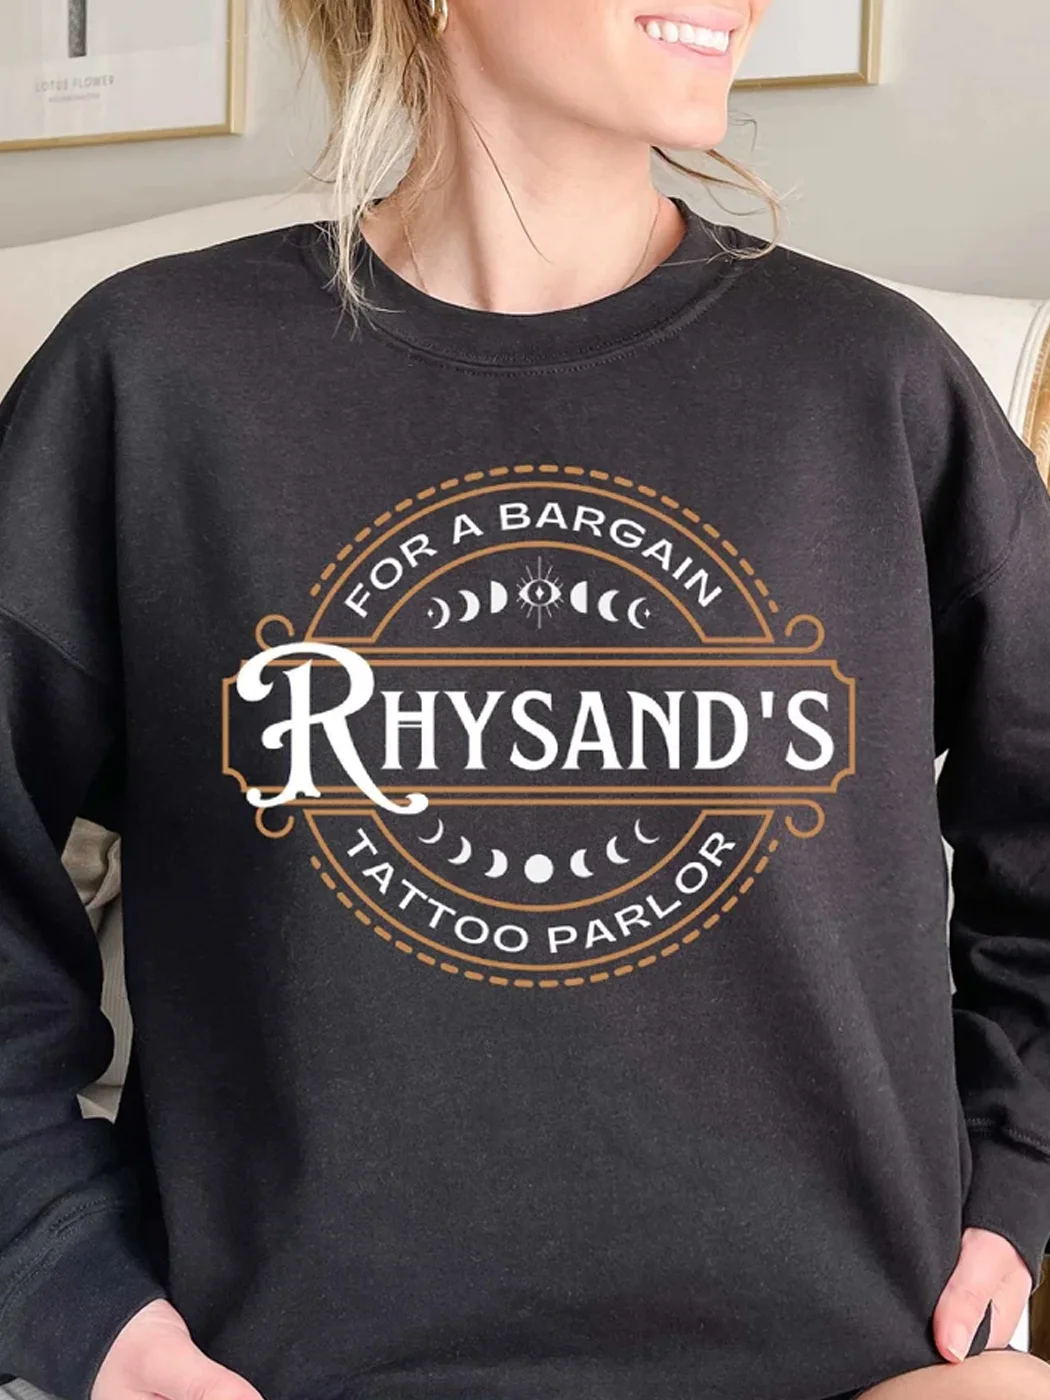 Rhysand's Sweatshirt, AcotarVelaris Sweatshirt / DarkAcademias /Darkacademias